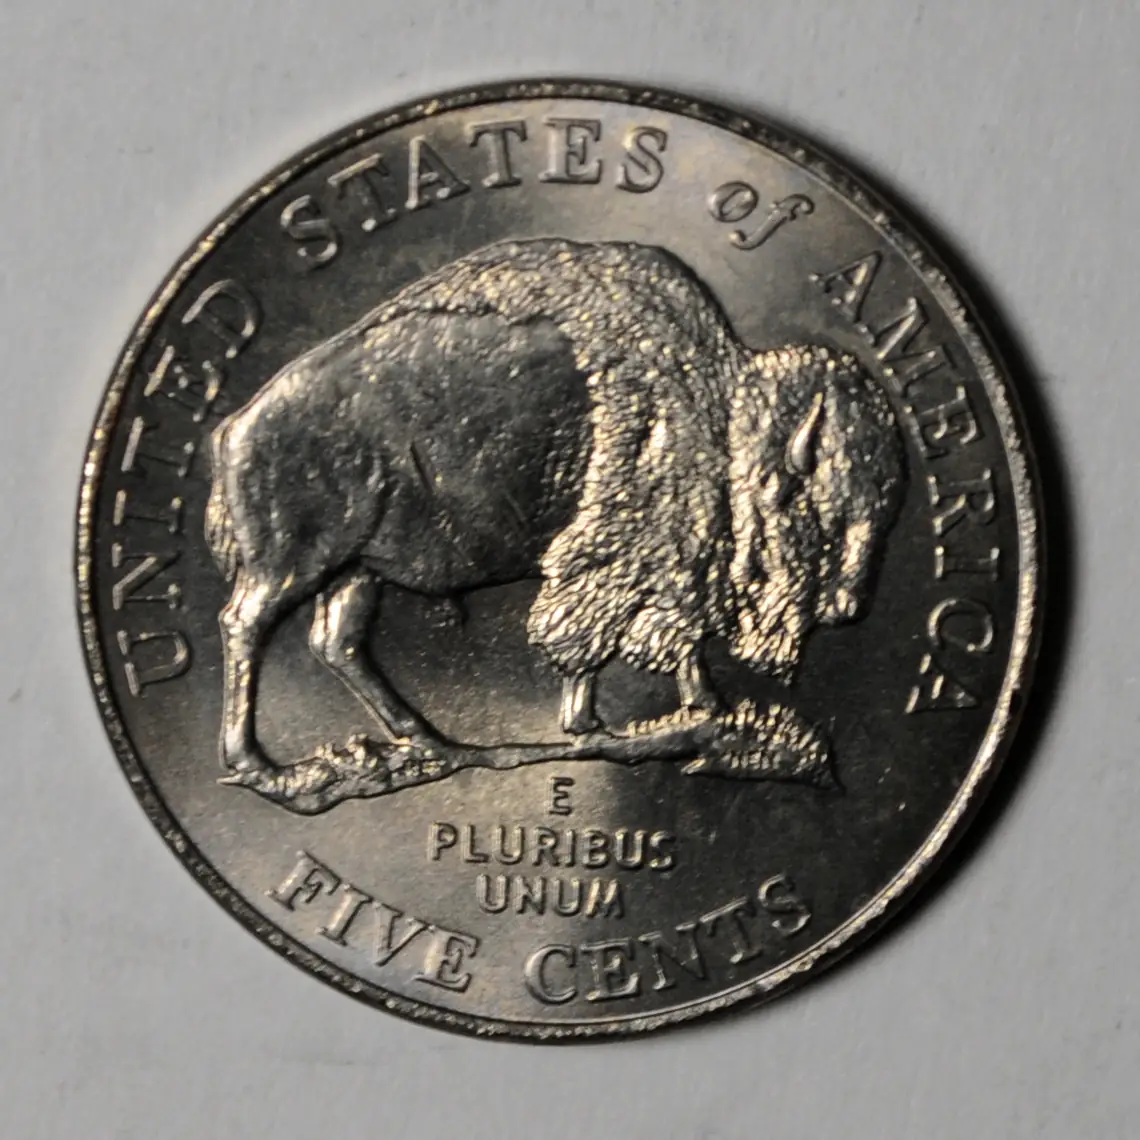 2005P Nickel American Bison rev